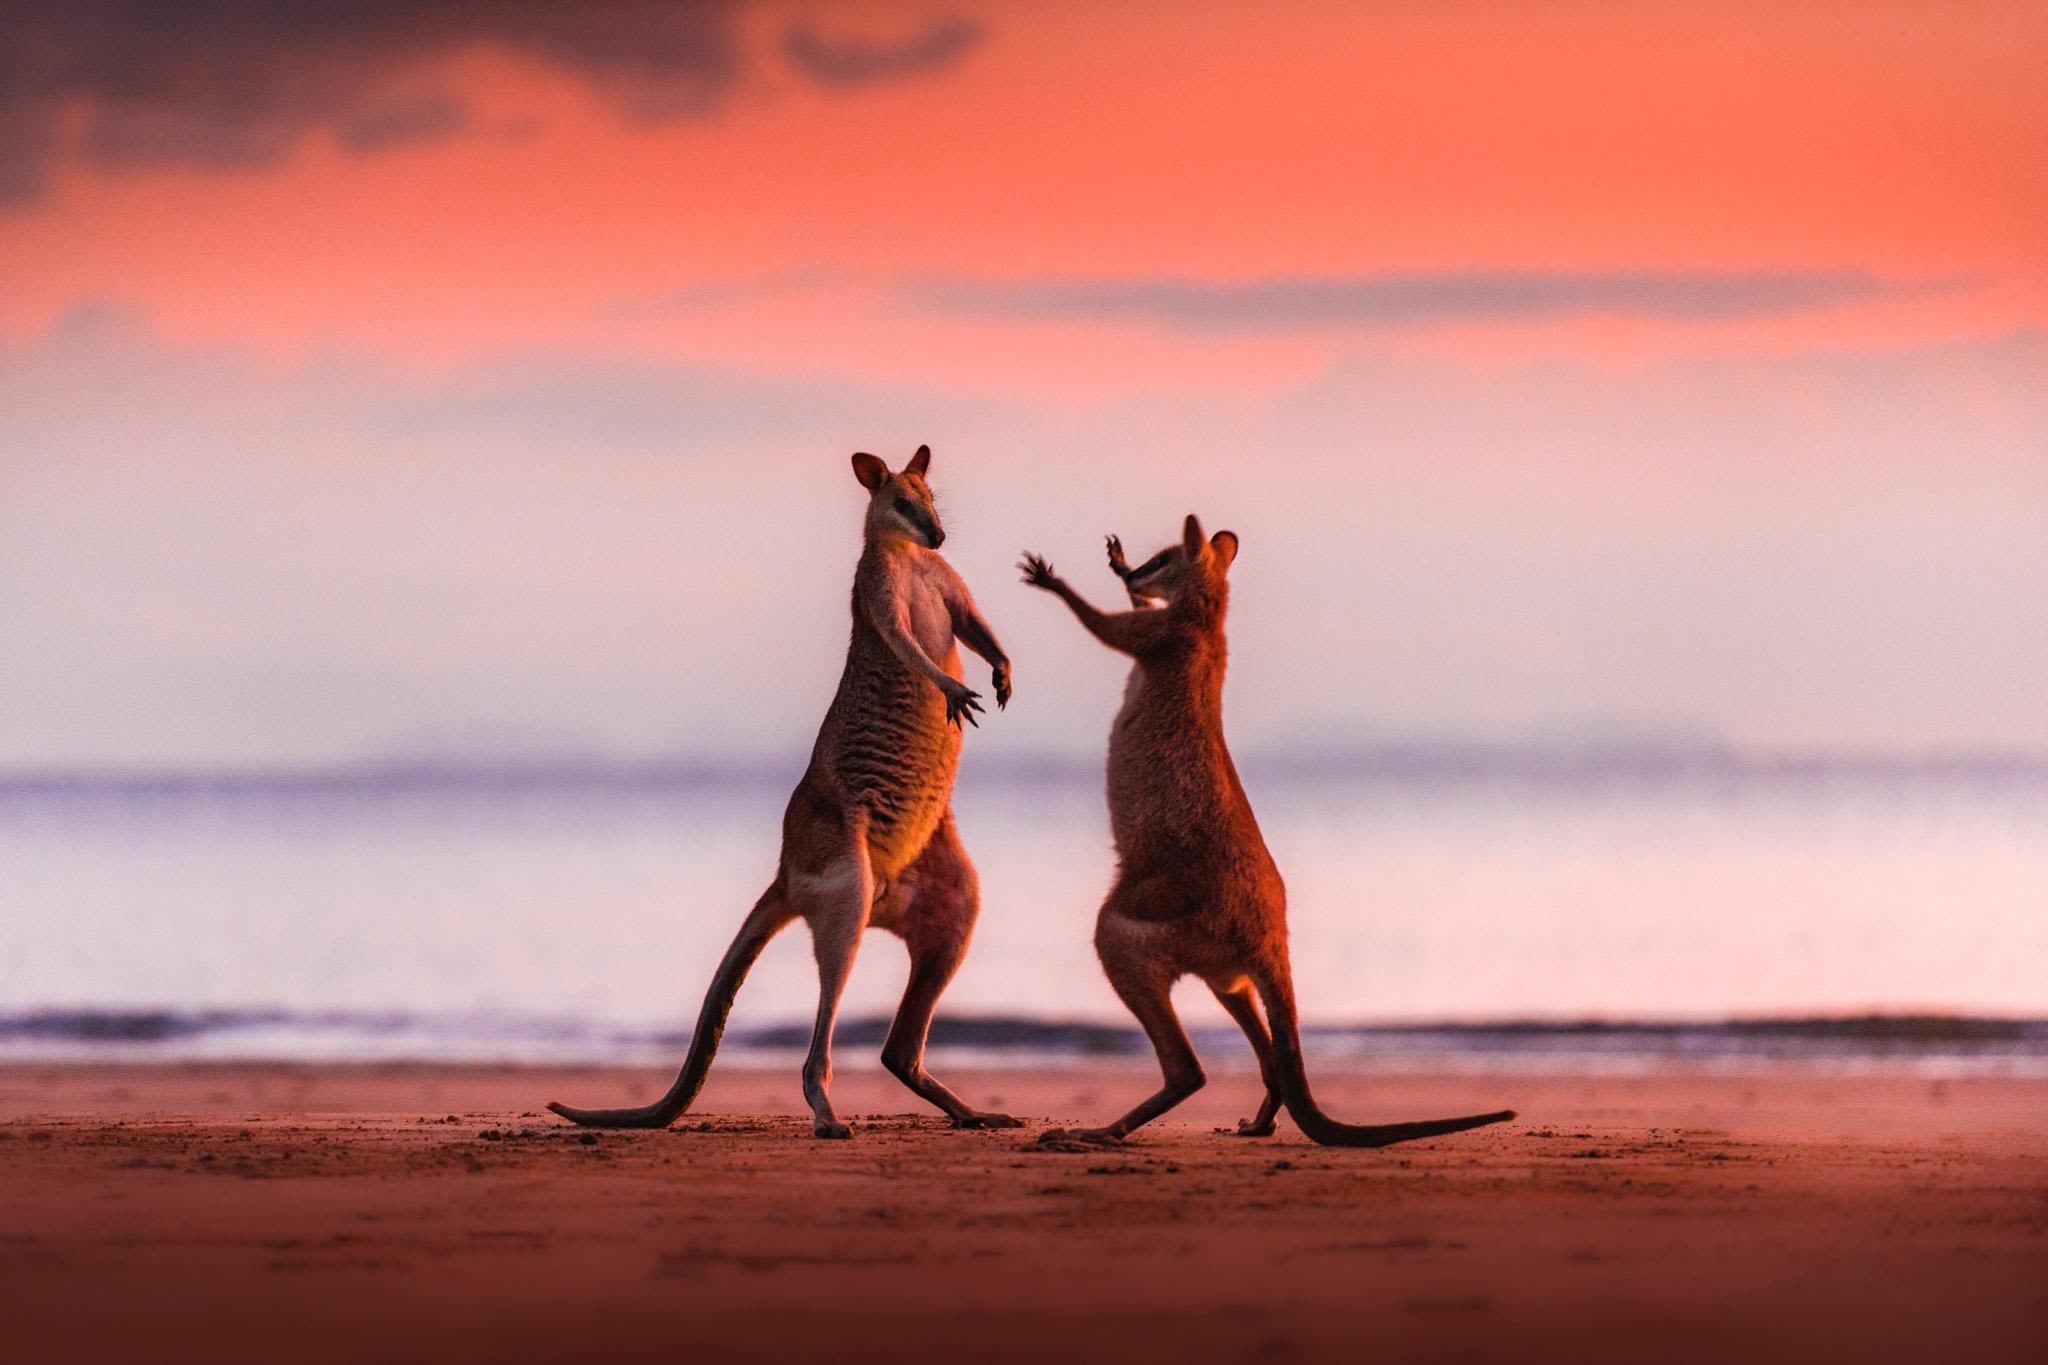 Boxing kangaroos at sunrise, Cape Hillsborough, Australia